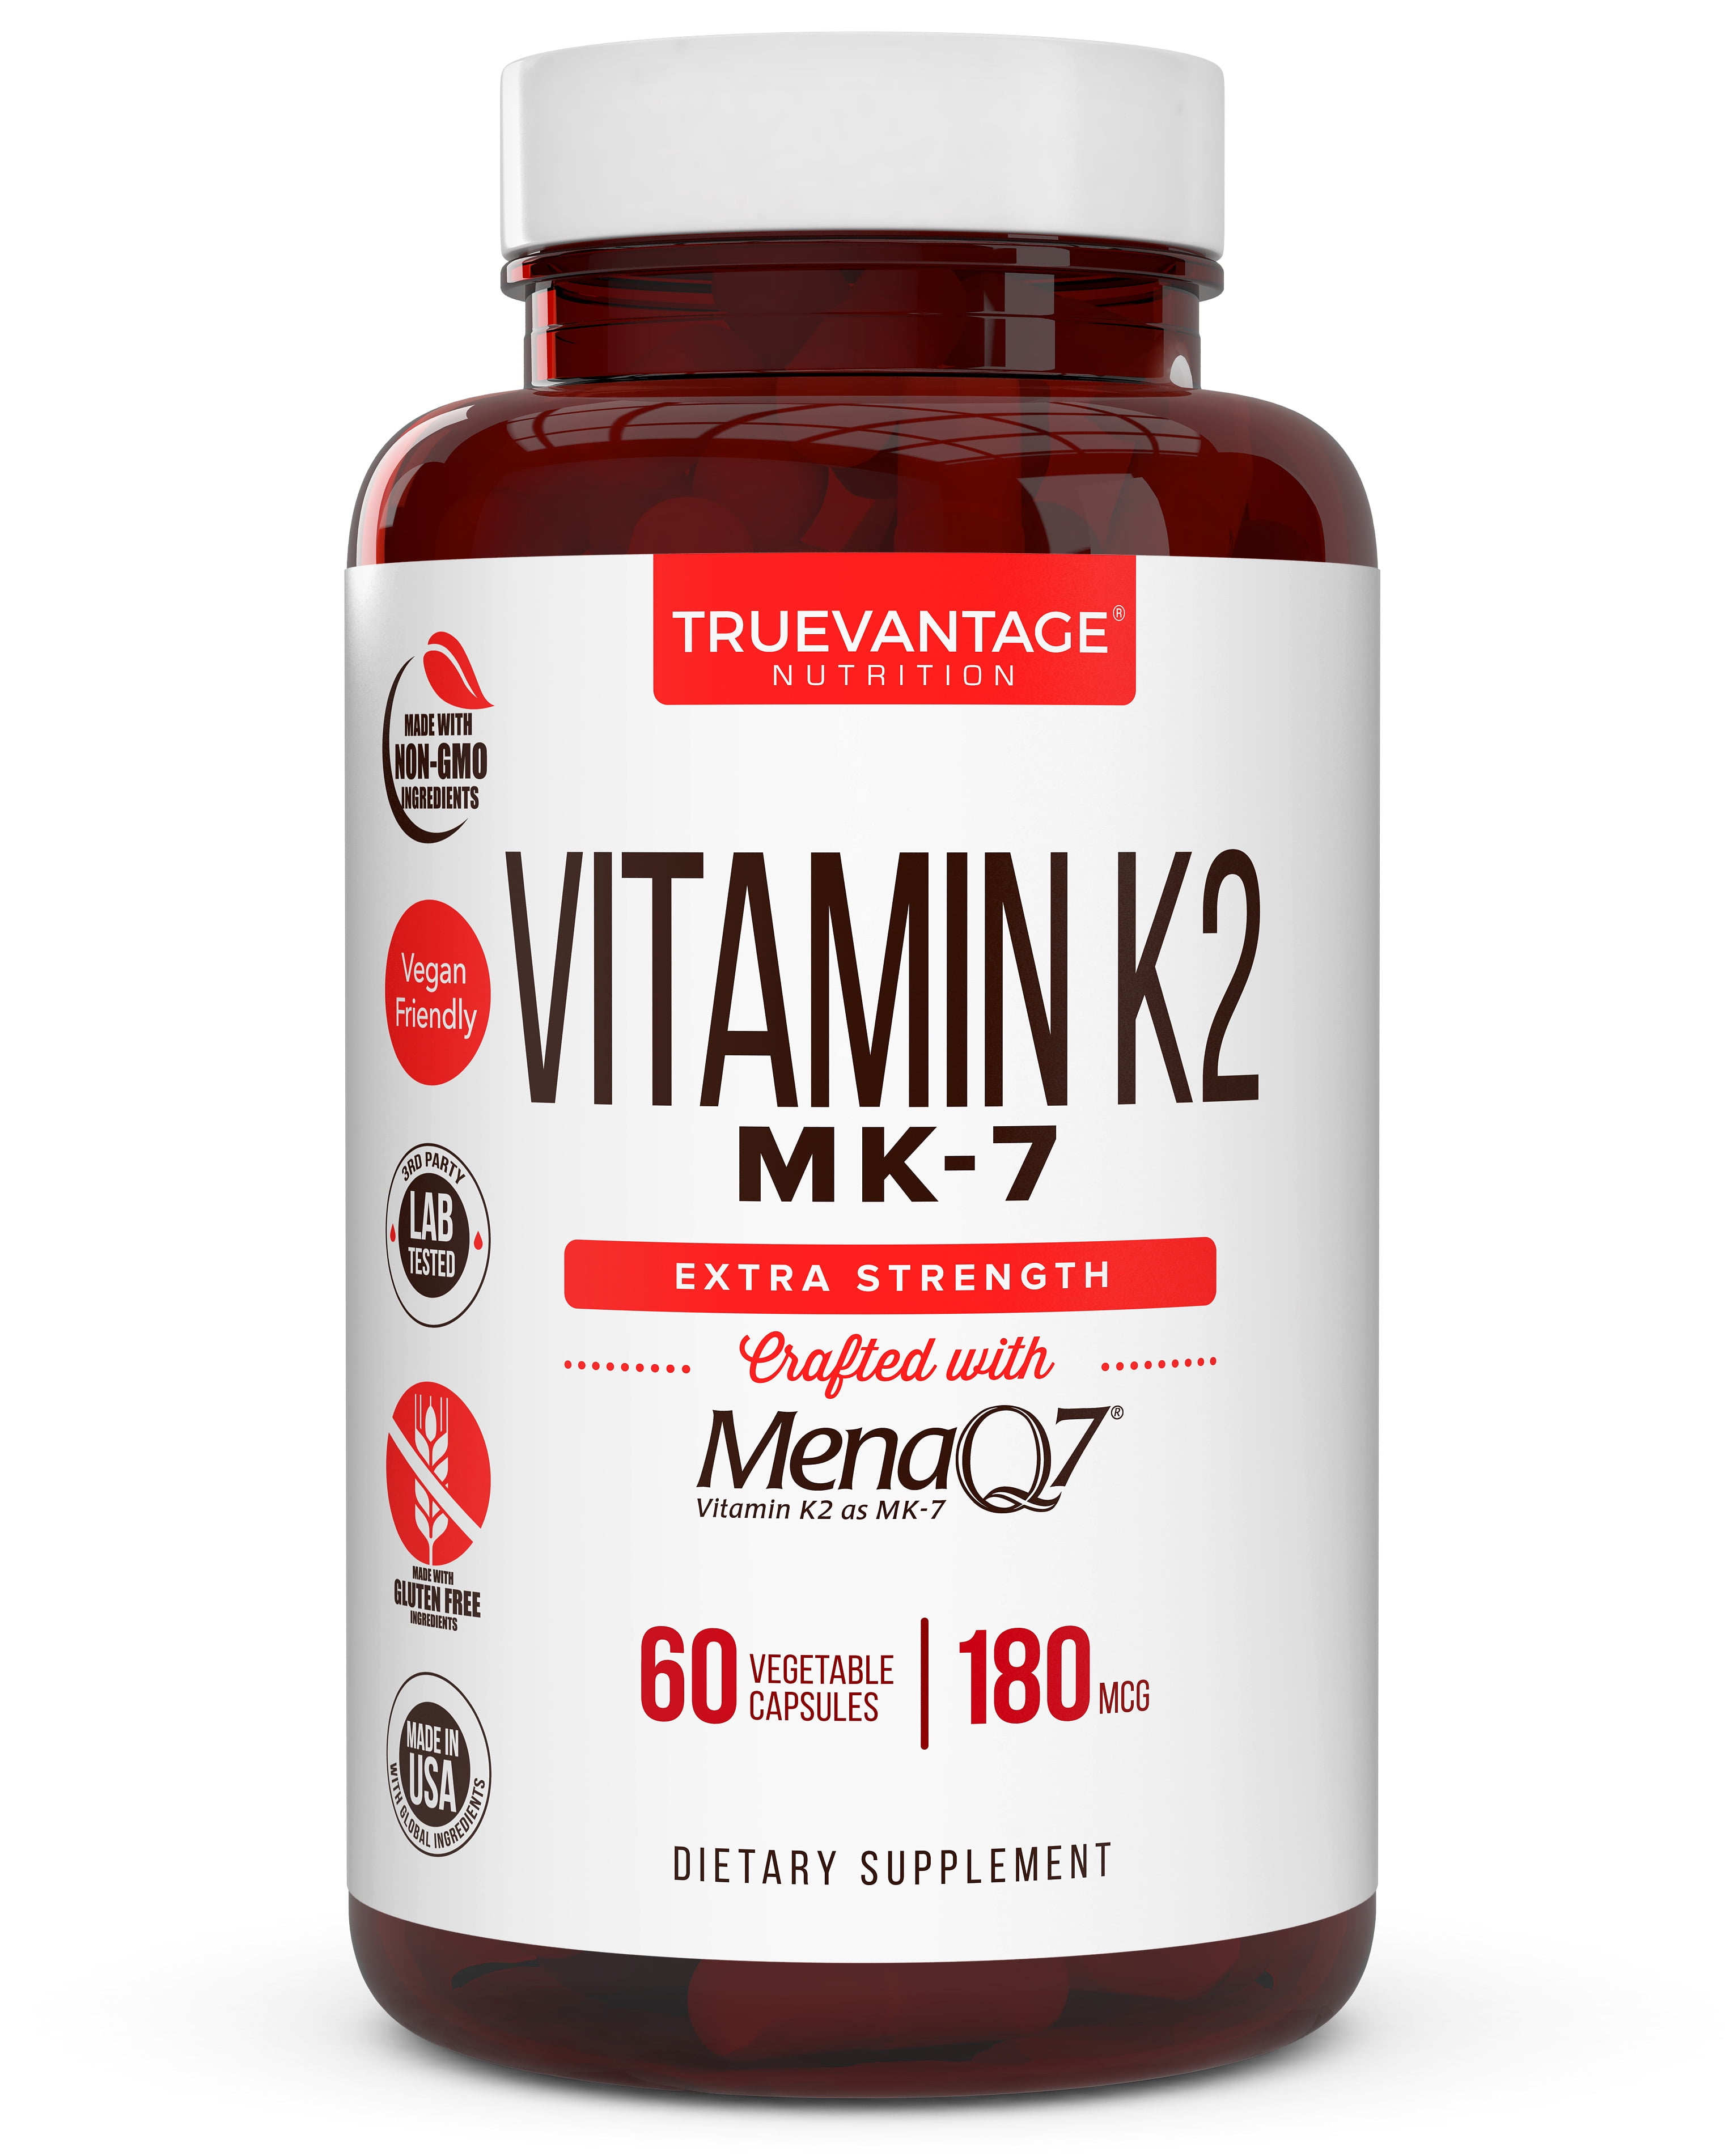 Truevantage Nutrition Vitamin K2 MK-7 MenaQ7 Supplement 180mcg - 60 Vegetable Capsules